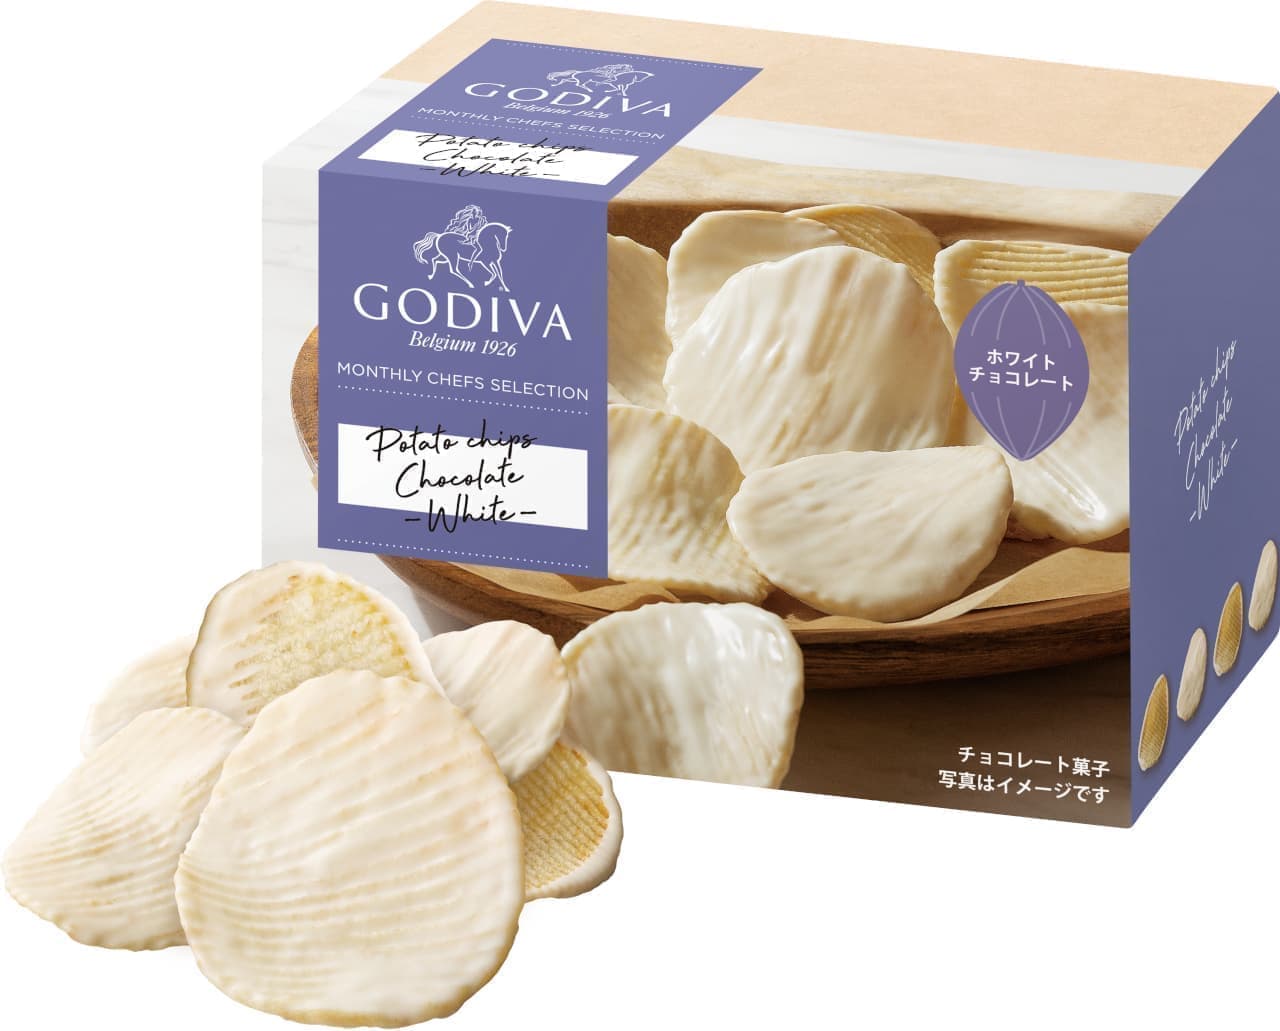 Godiva "Potato Chips Chocolate White" package